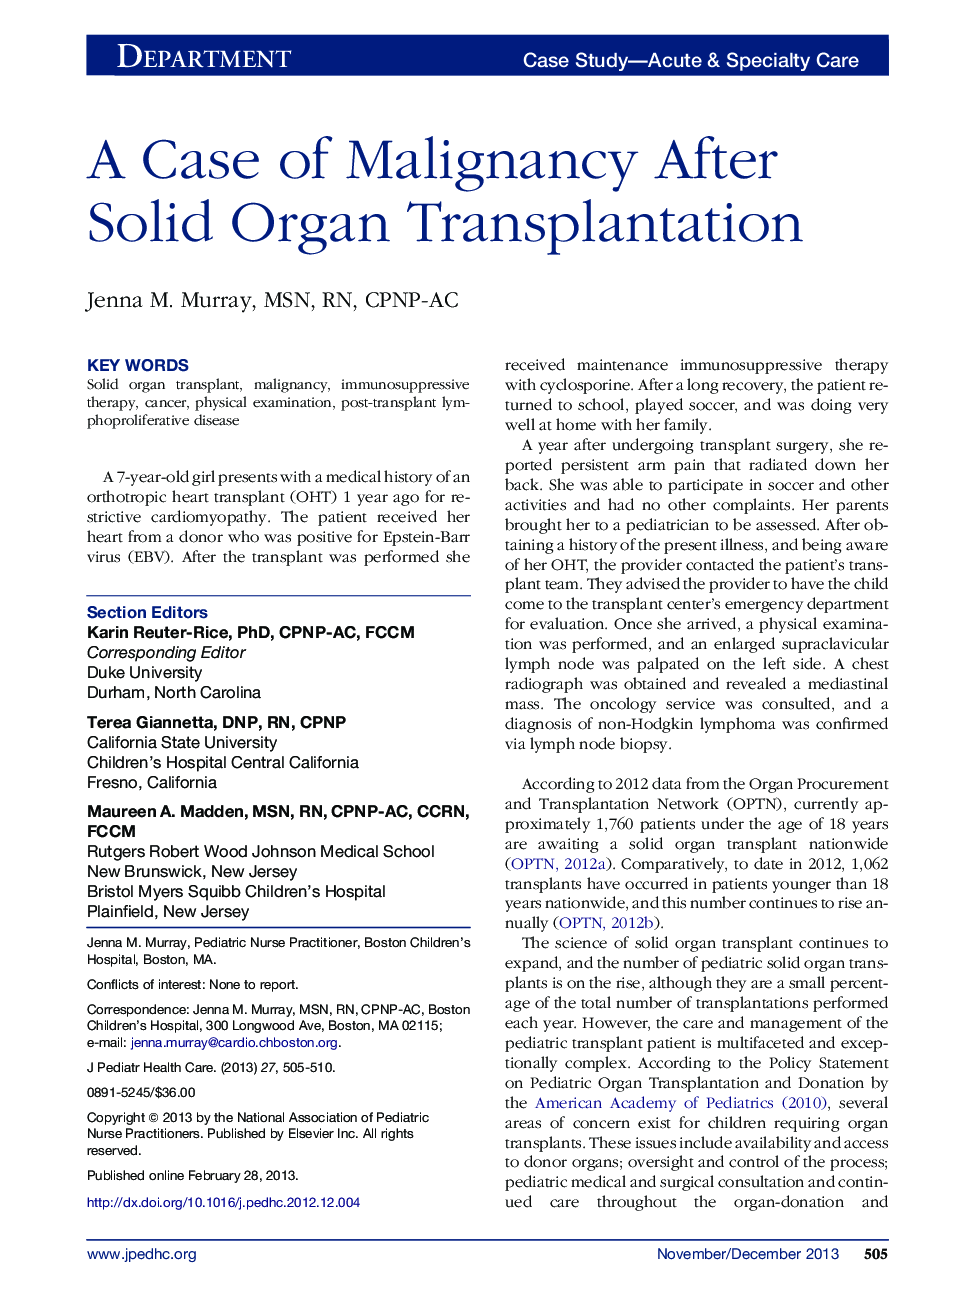 A Case of Malignancy After Solid Organ Transplantation